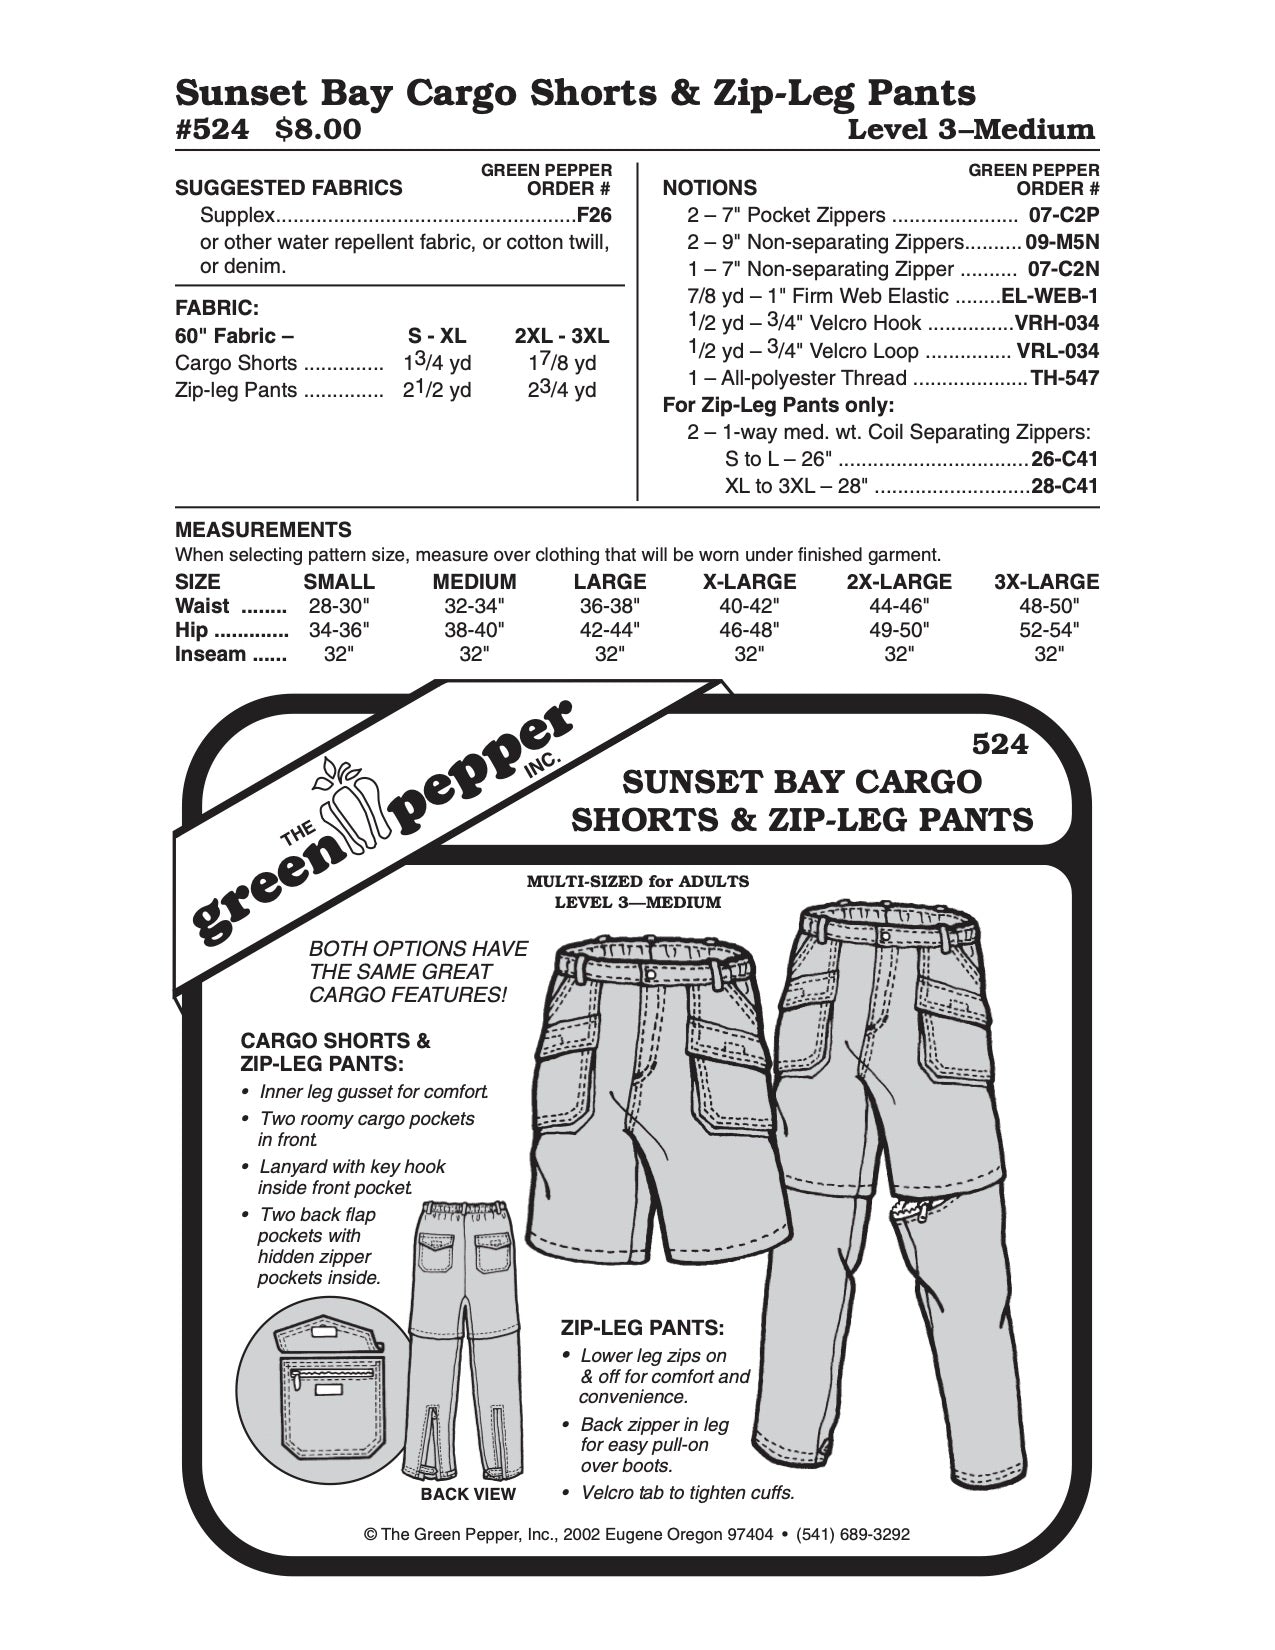 Adult's Sunset Bay Cargo Shorts & Zip Leg Pants Pattern - 524